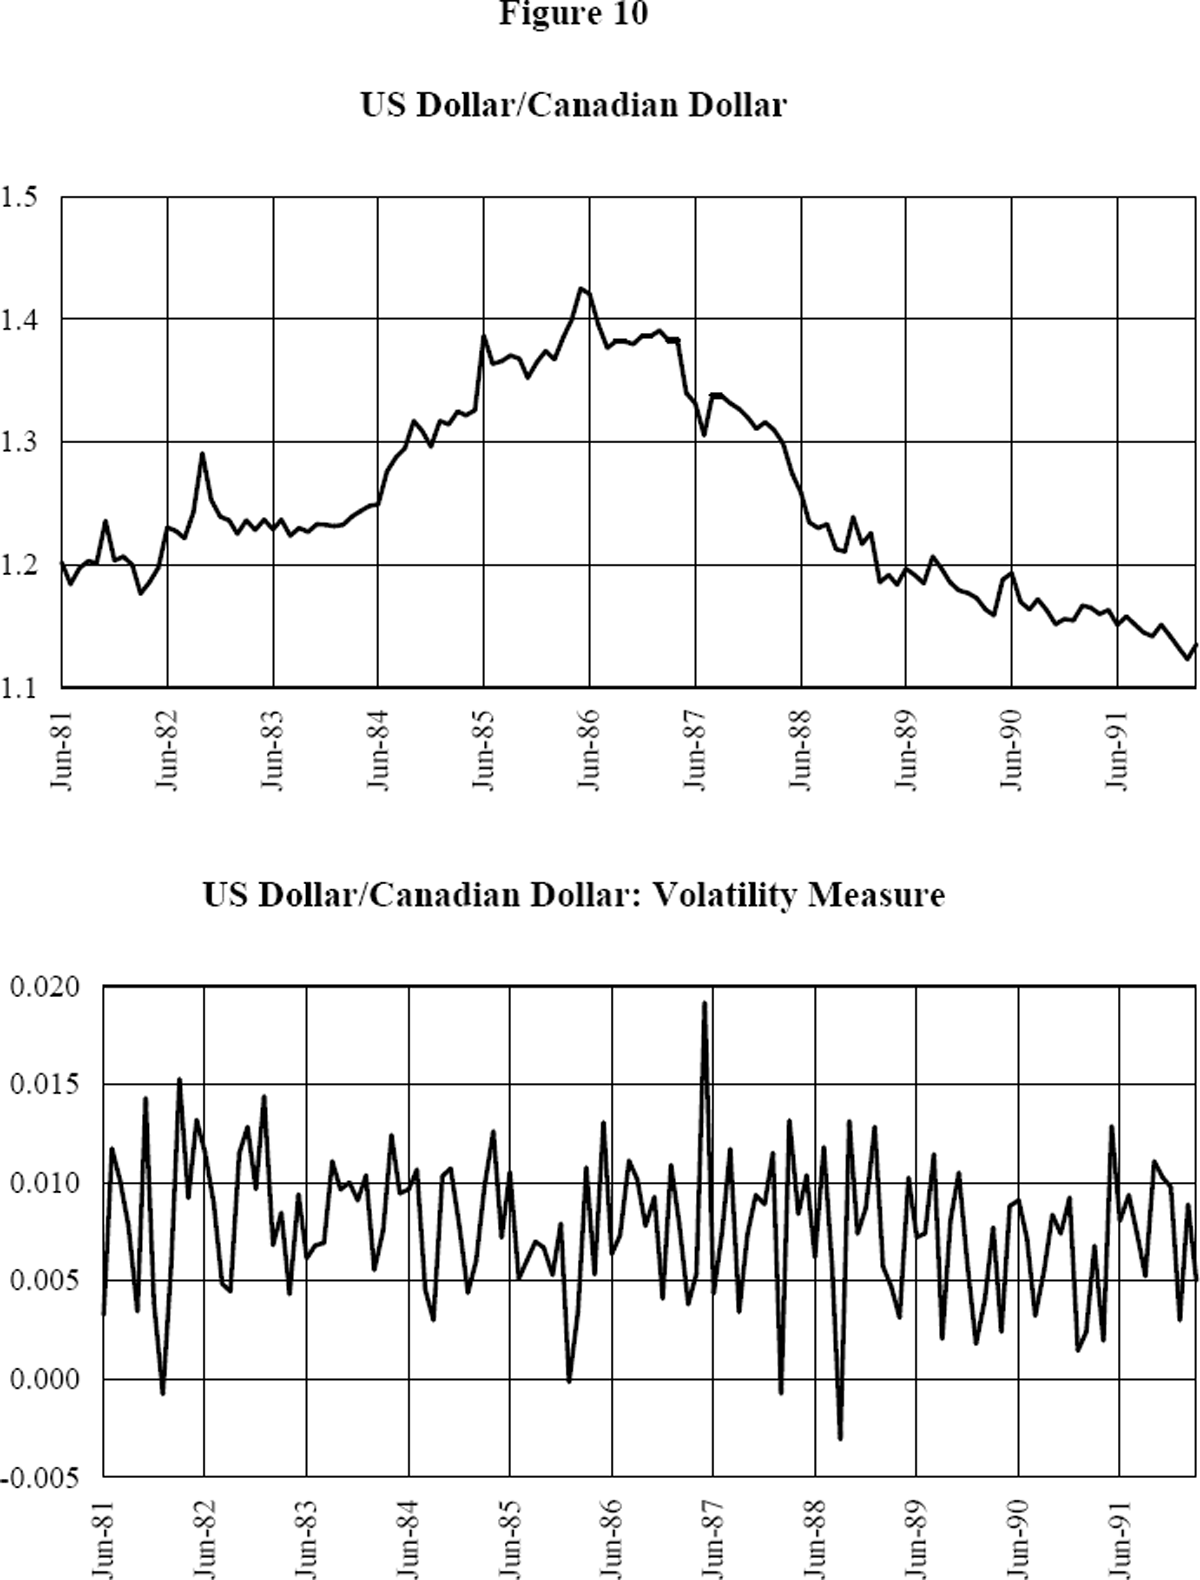 Figure 10: US Dollar/Canadian Dollar and Volatility Measure